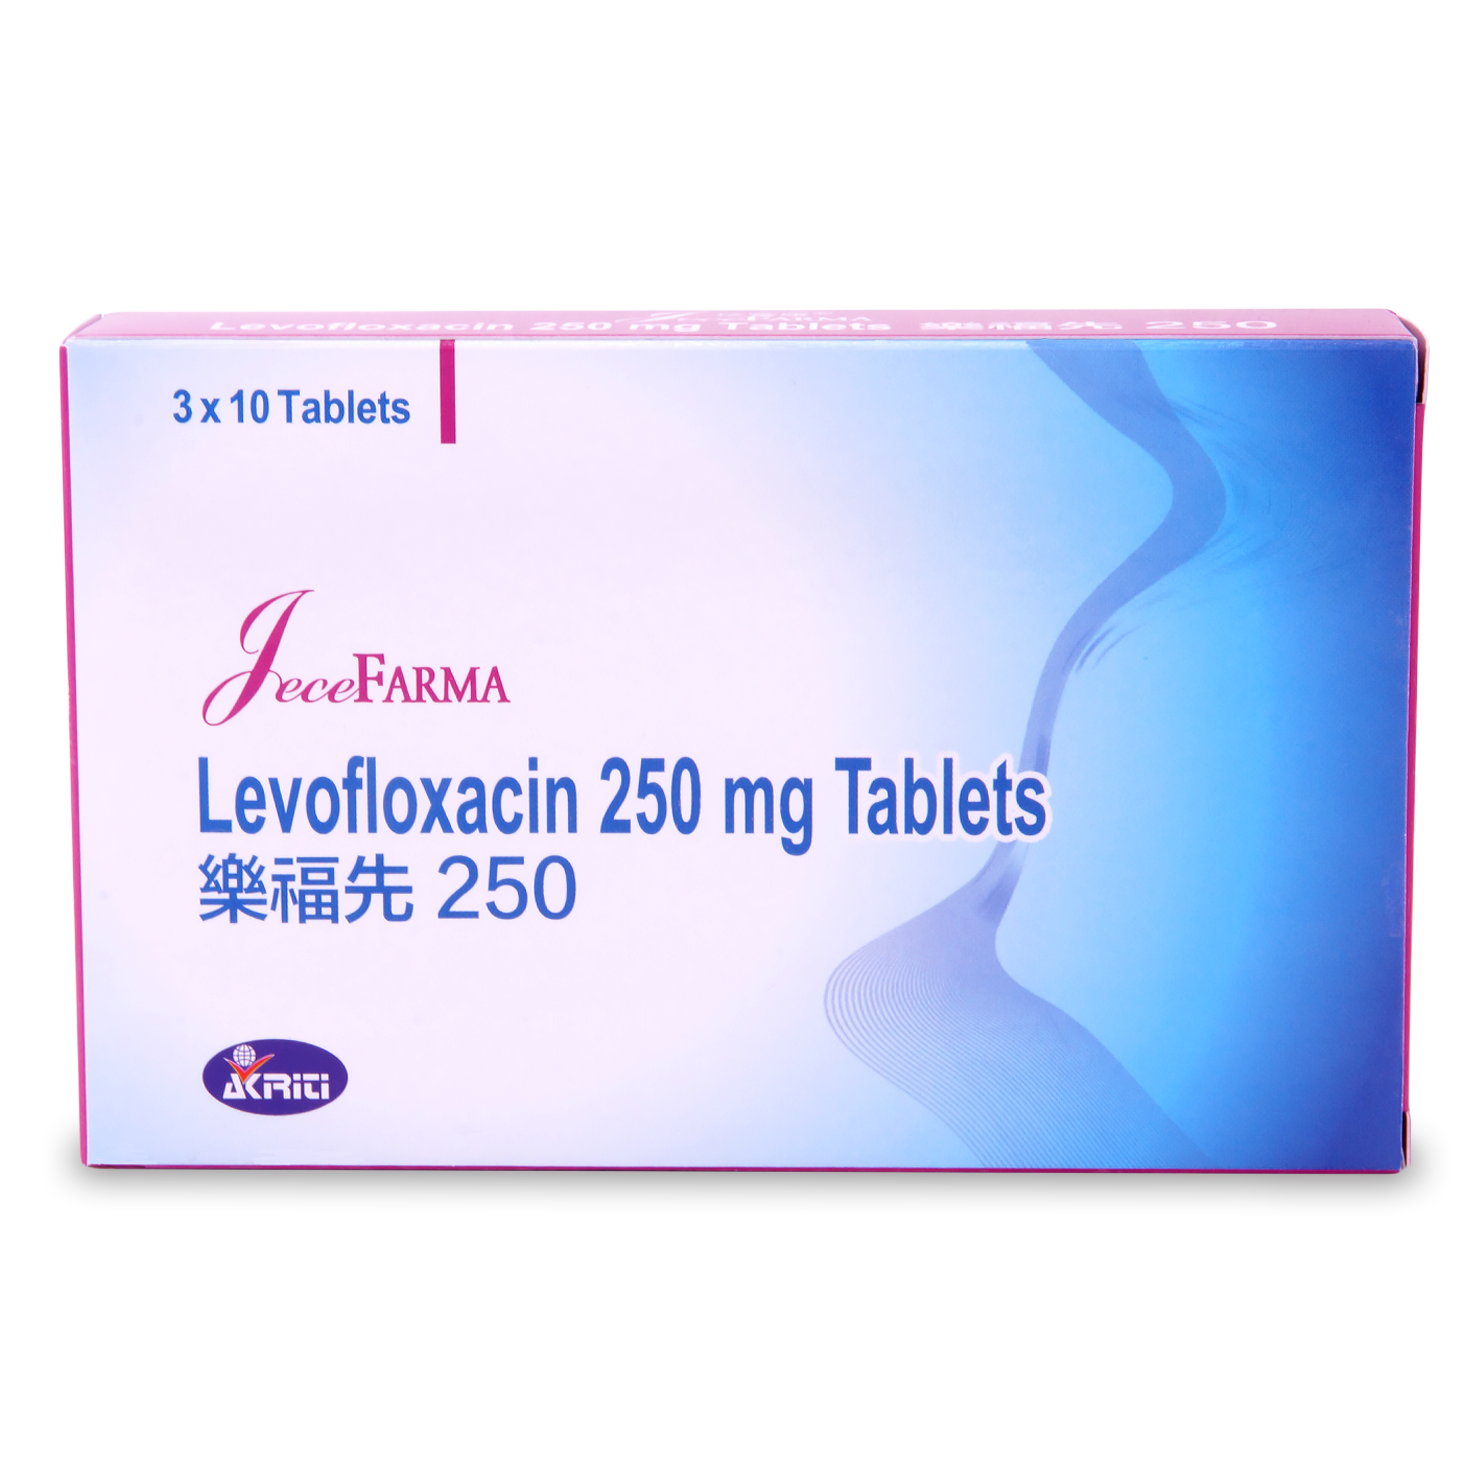 樂福先 Jecefarma Levofloxacin Tablets 250mg 3X10's (P1S1S3)